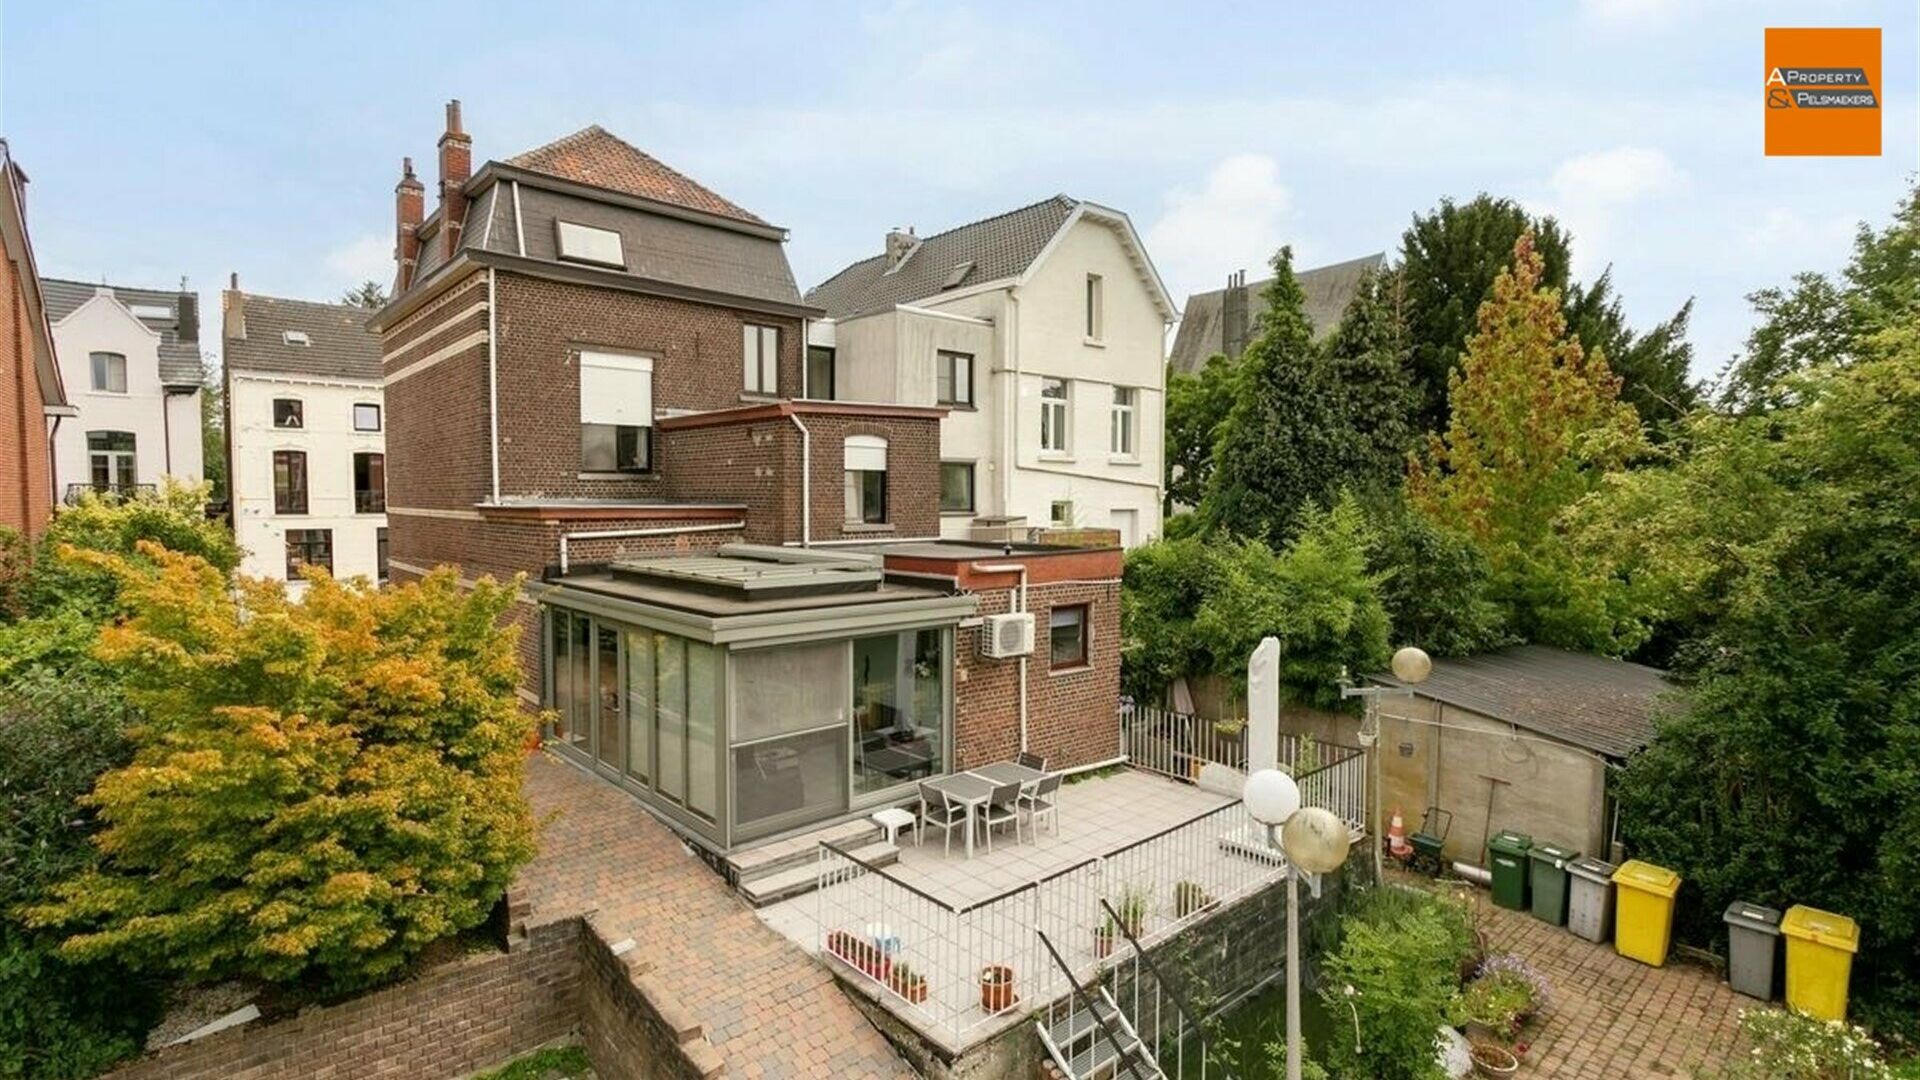 Investment Property for sale in KORTENBERG